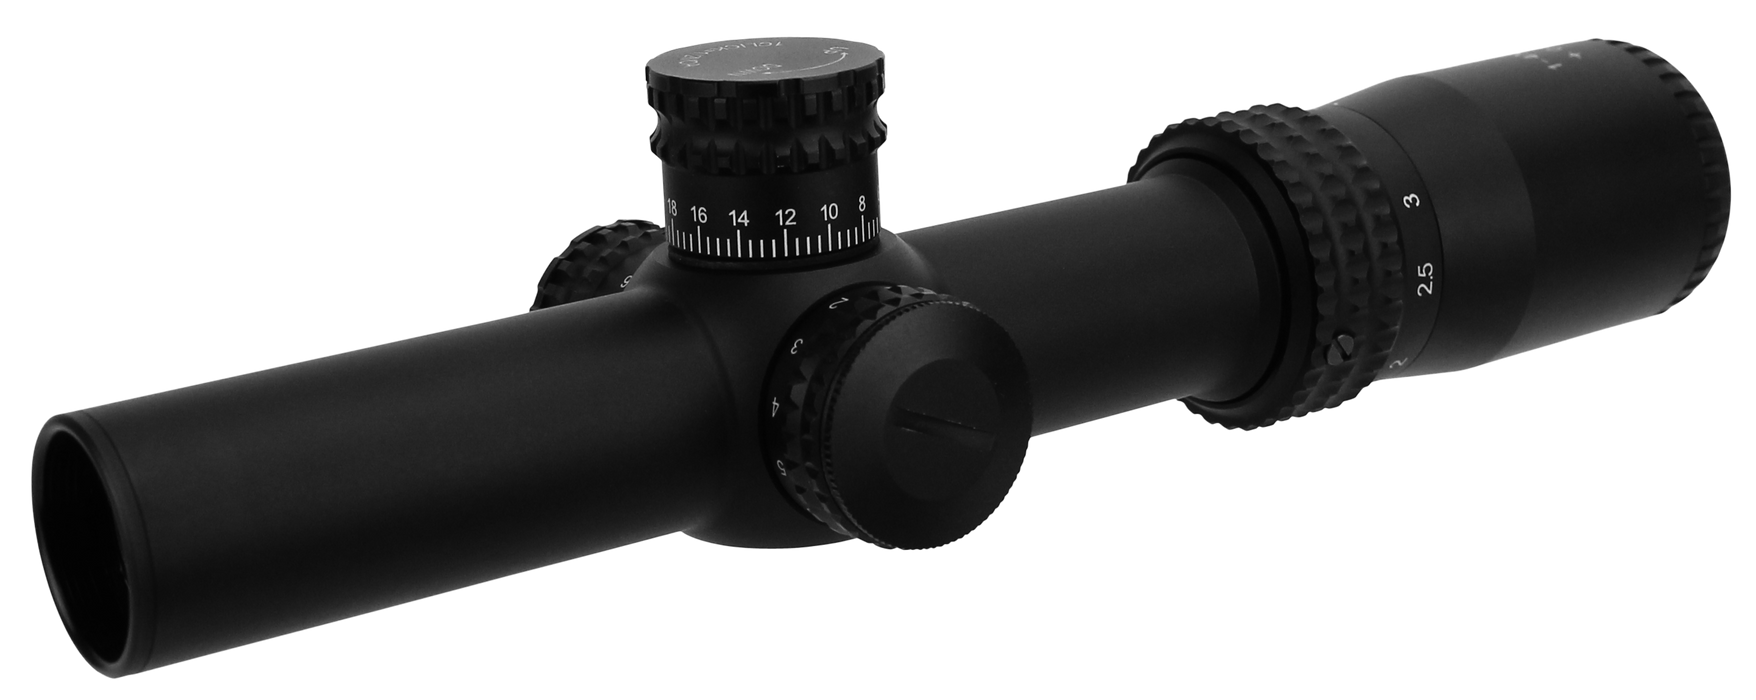 Tacfire Hd Riflescope, Tacfire Sc1424cc-m Hd Rfl Scp 1-4x24 Mil Dot